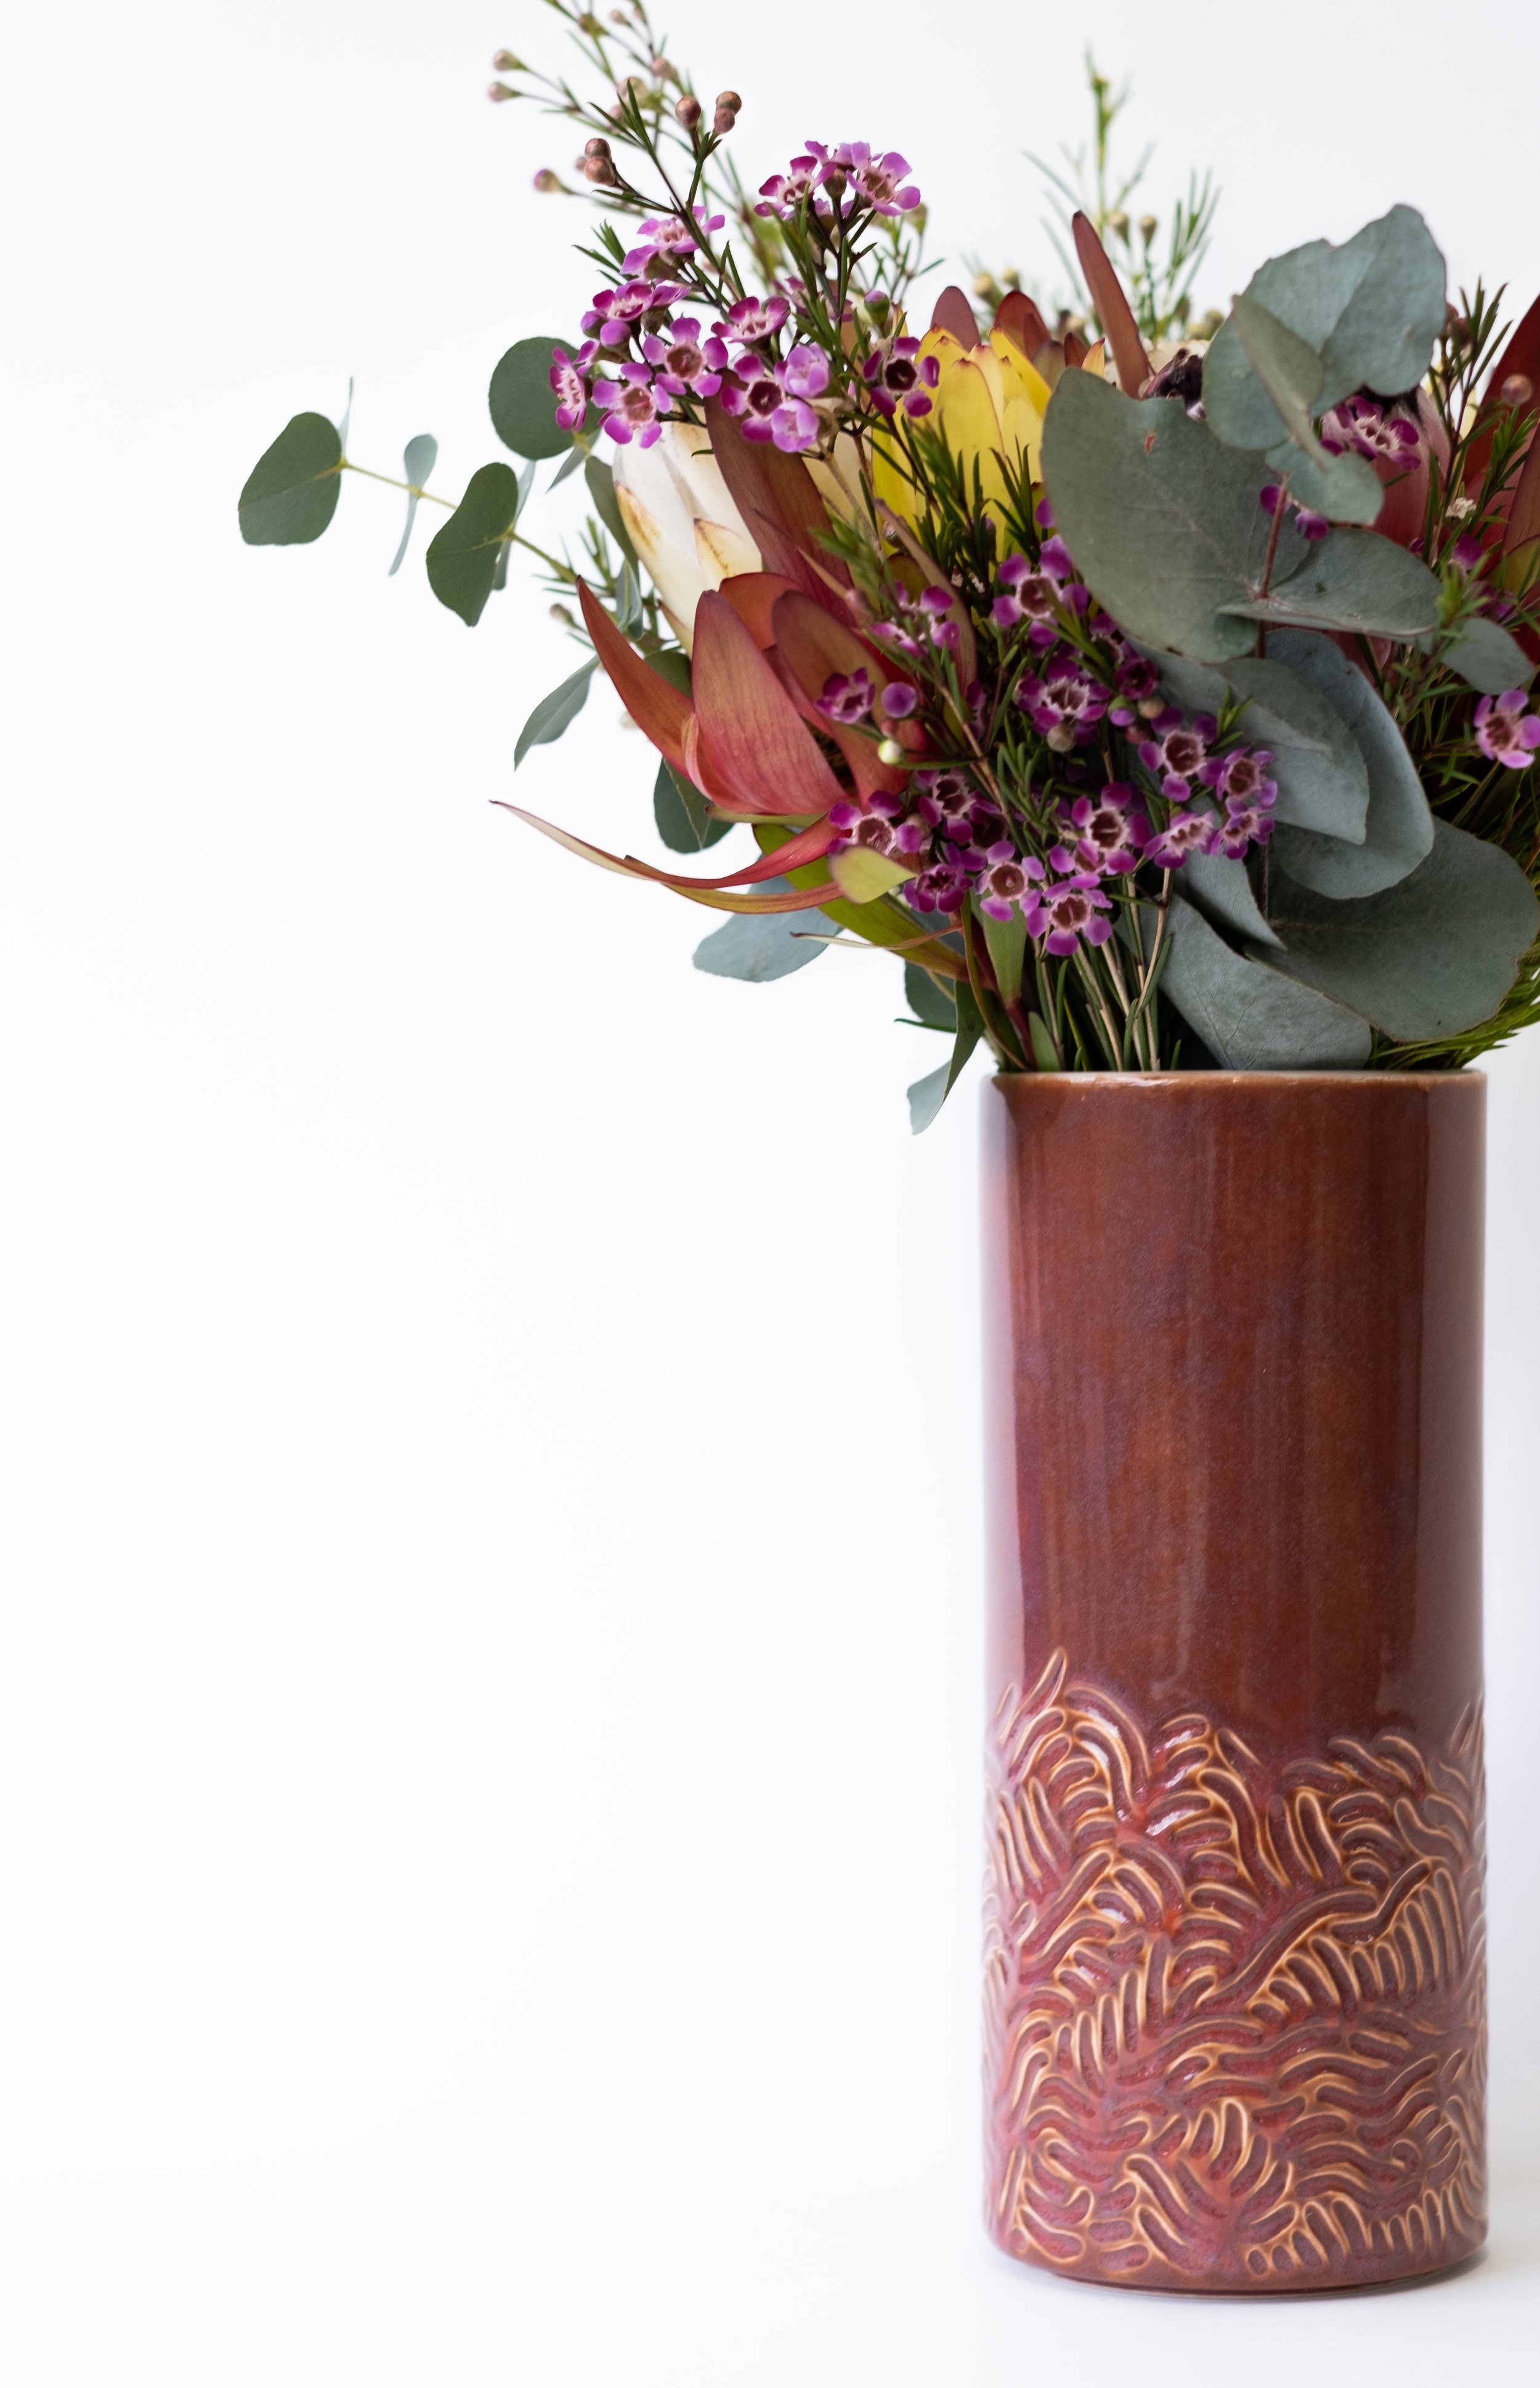 Ali-Potter-Ceramics-Red-Carved-Vase, photography by Anna Revesz.jpg